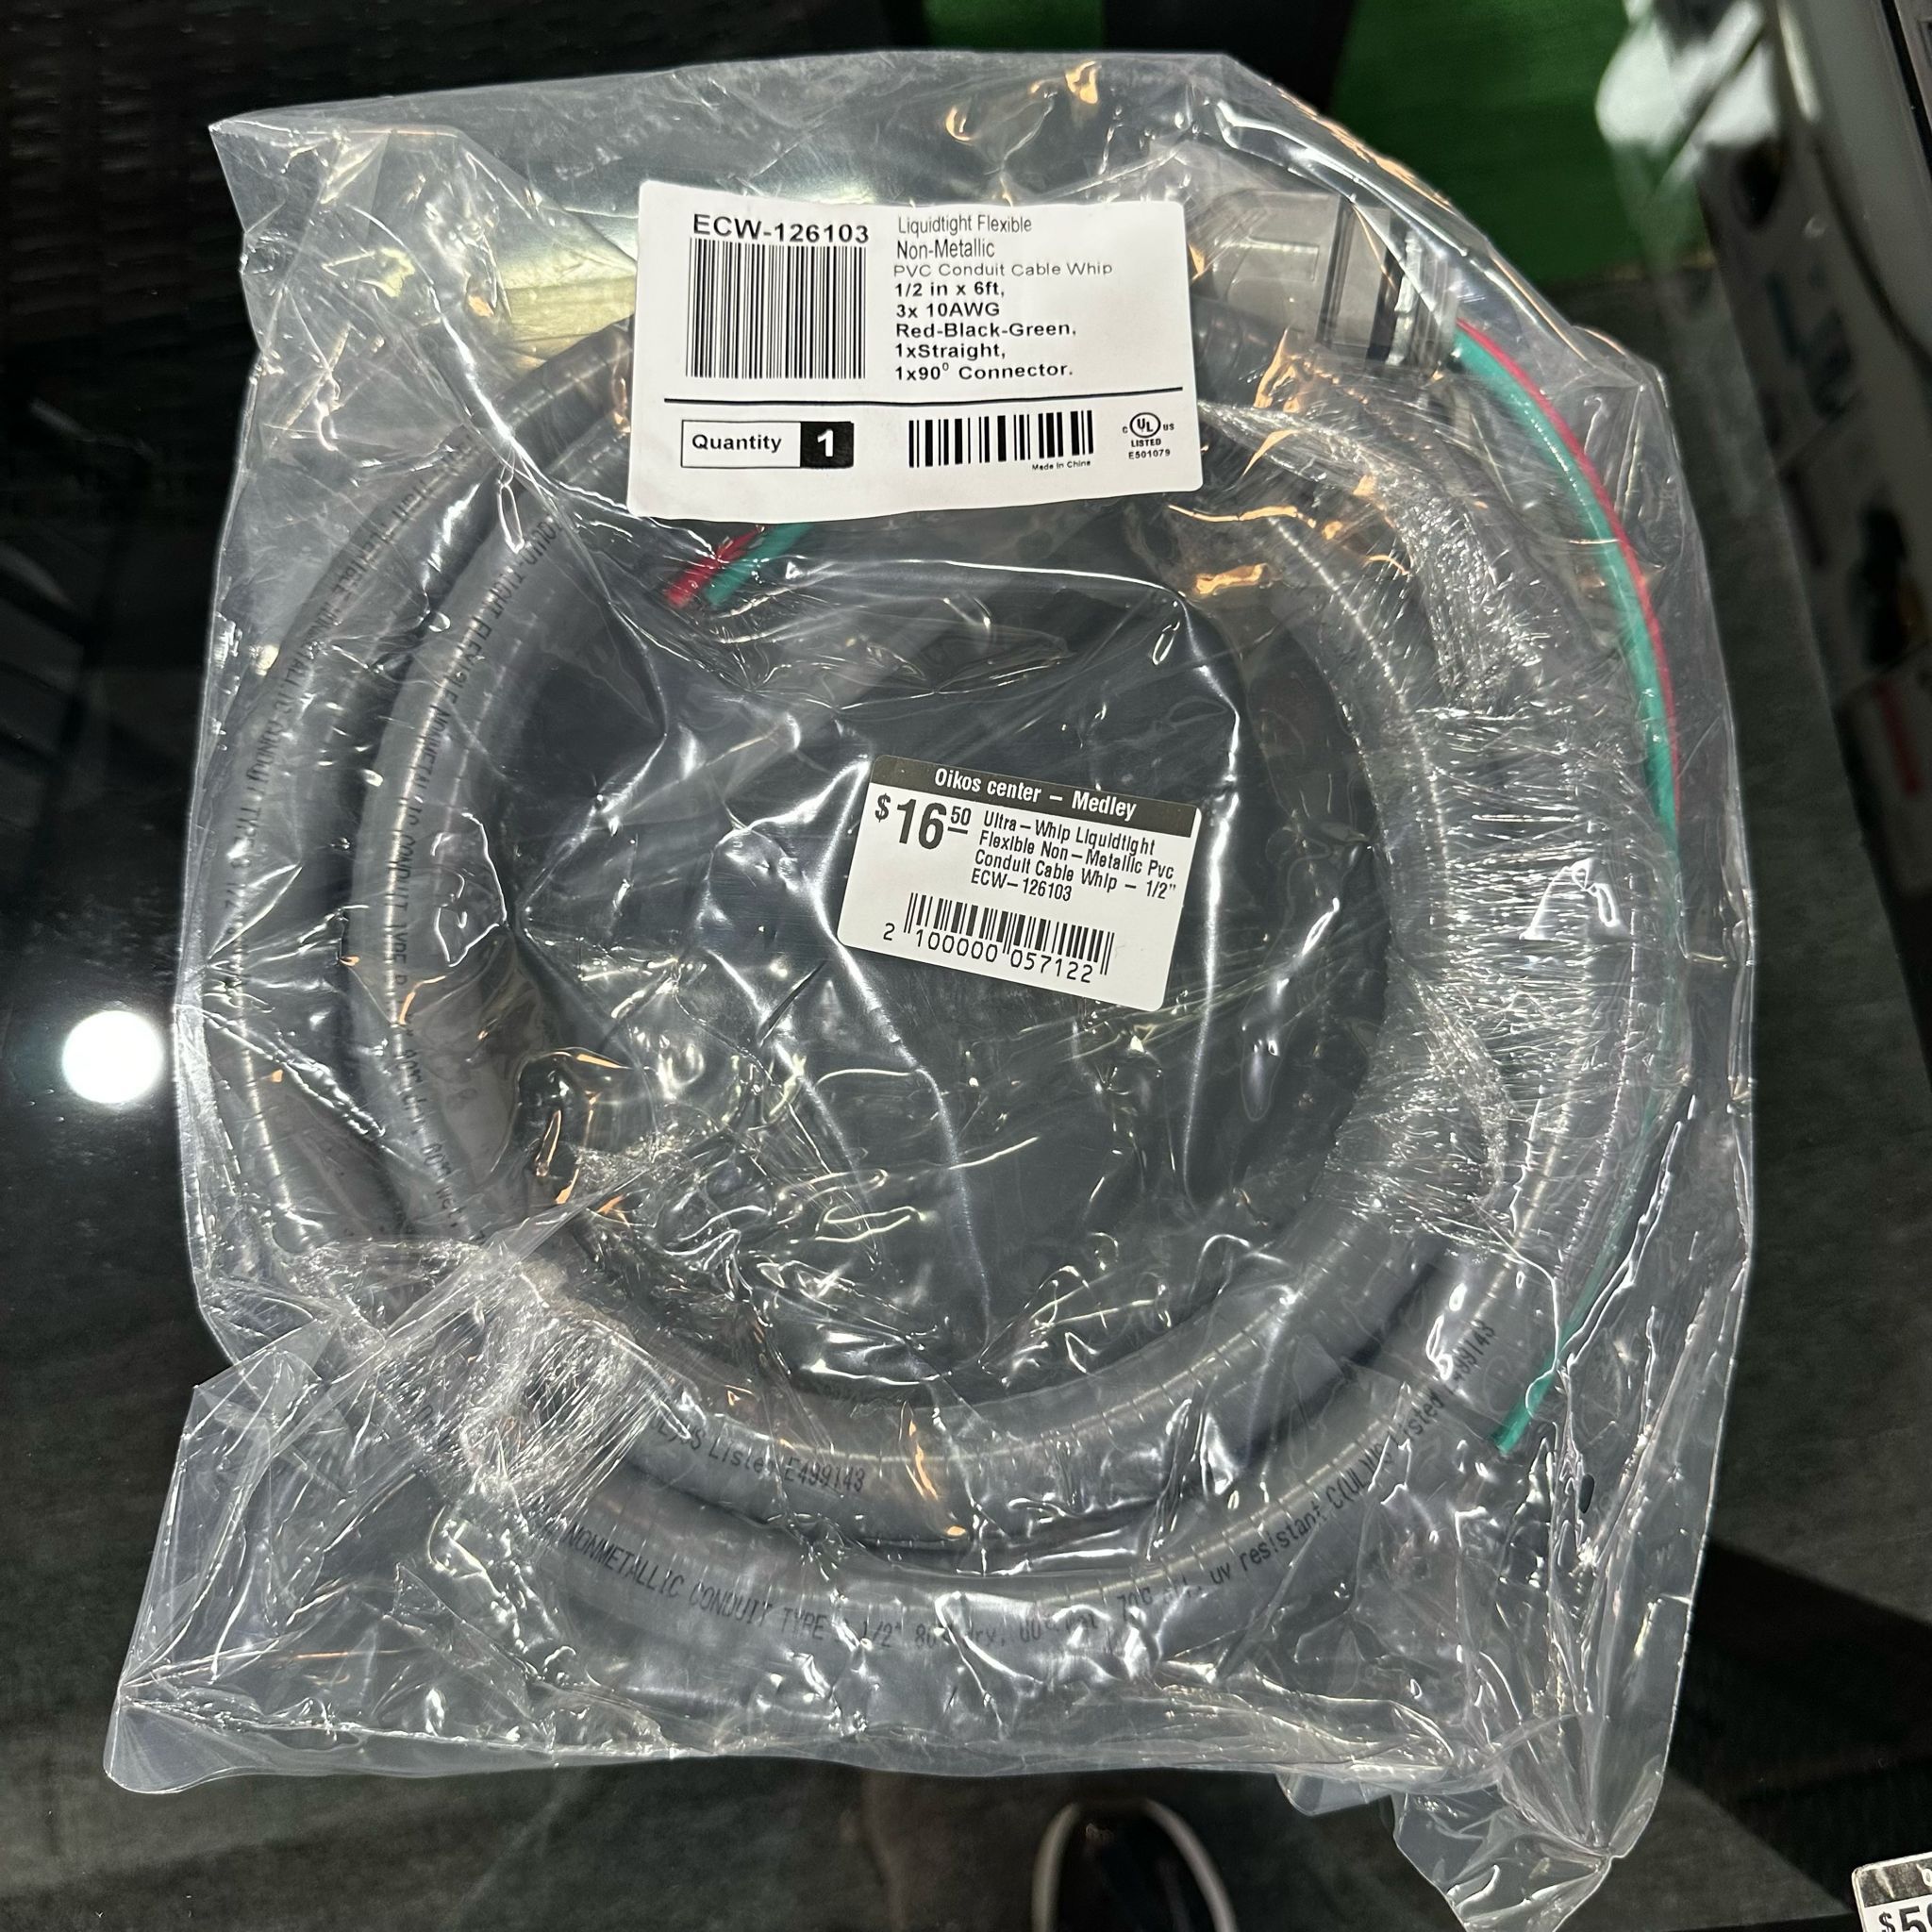 Ultra-whip Liquidtight Flexible Non-metallic Pvc Conduit Cable Whip - 1/2" Ecw-126103